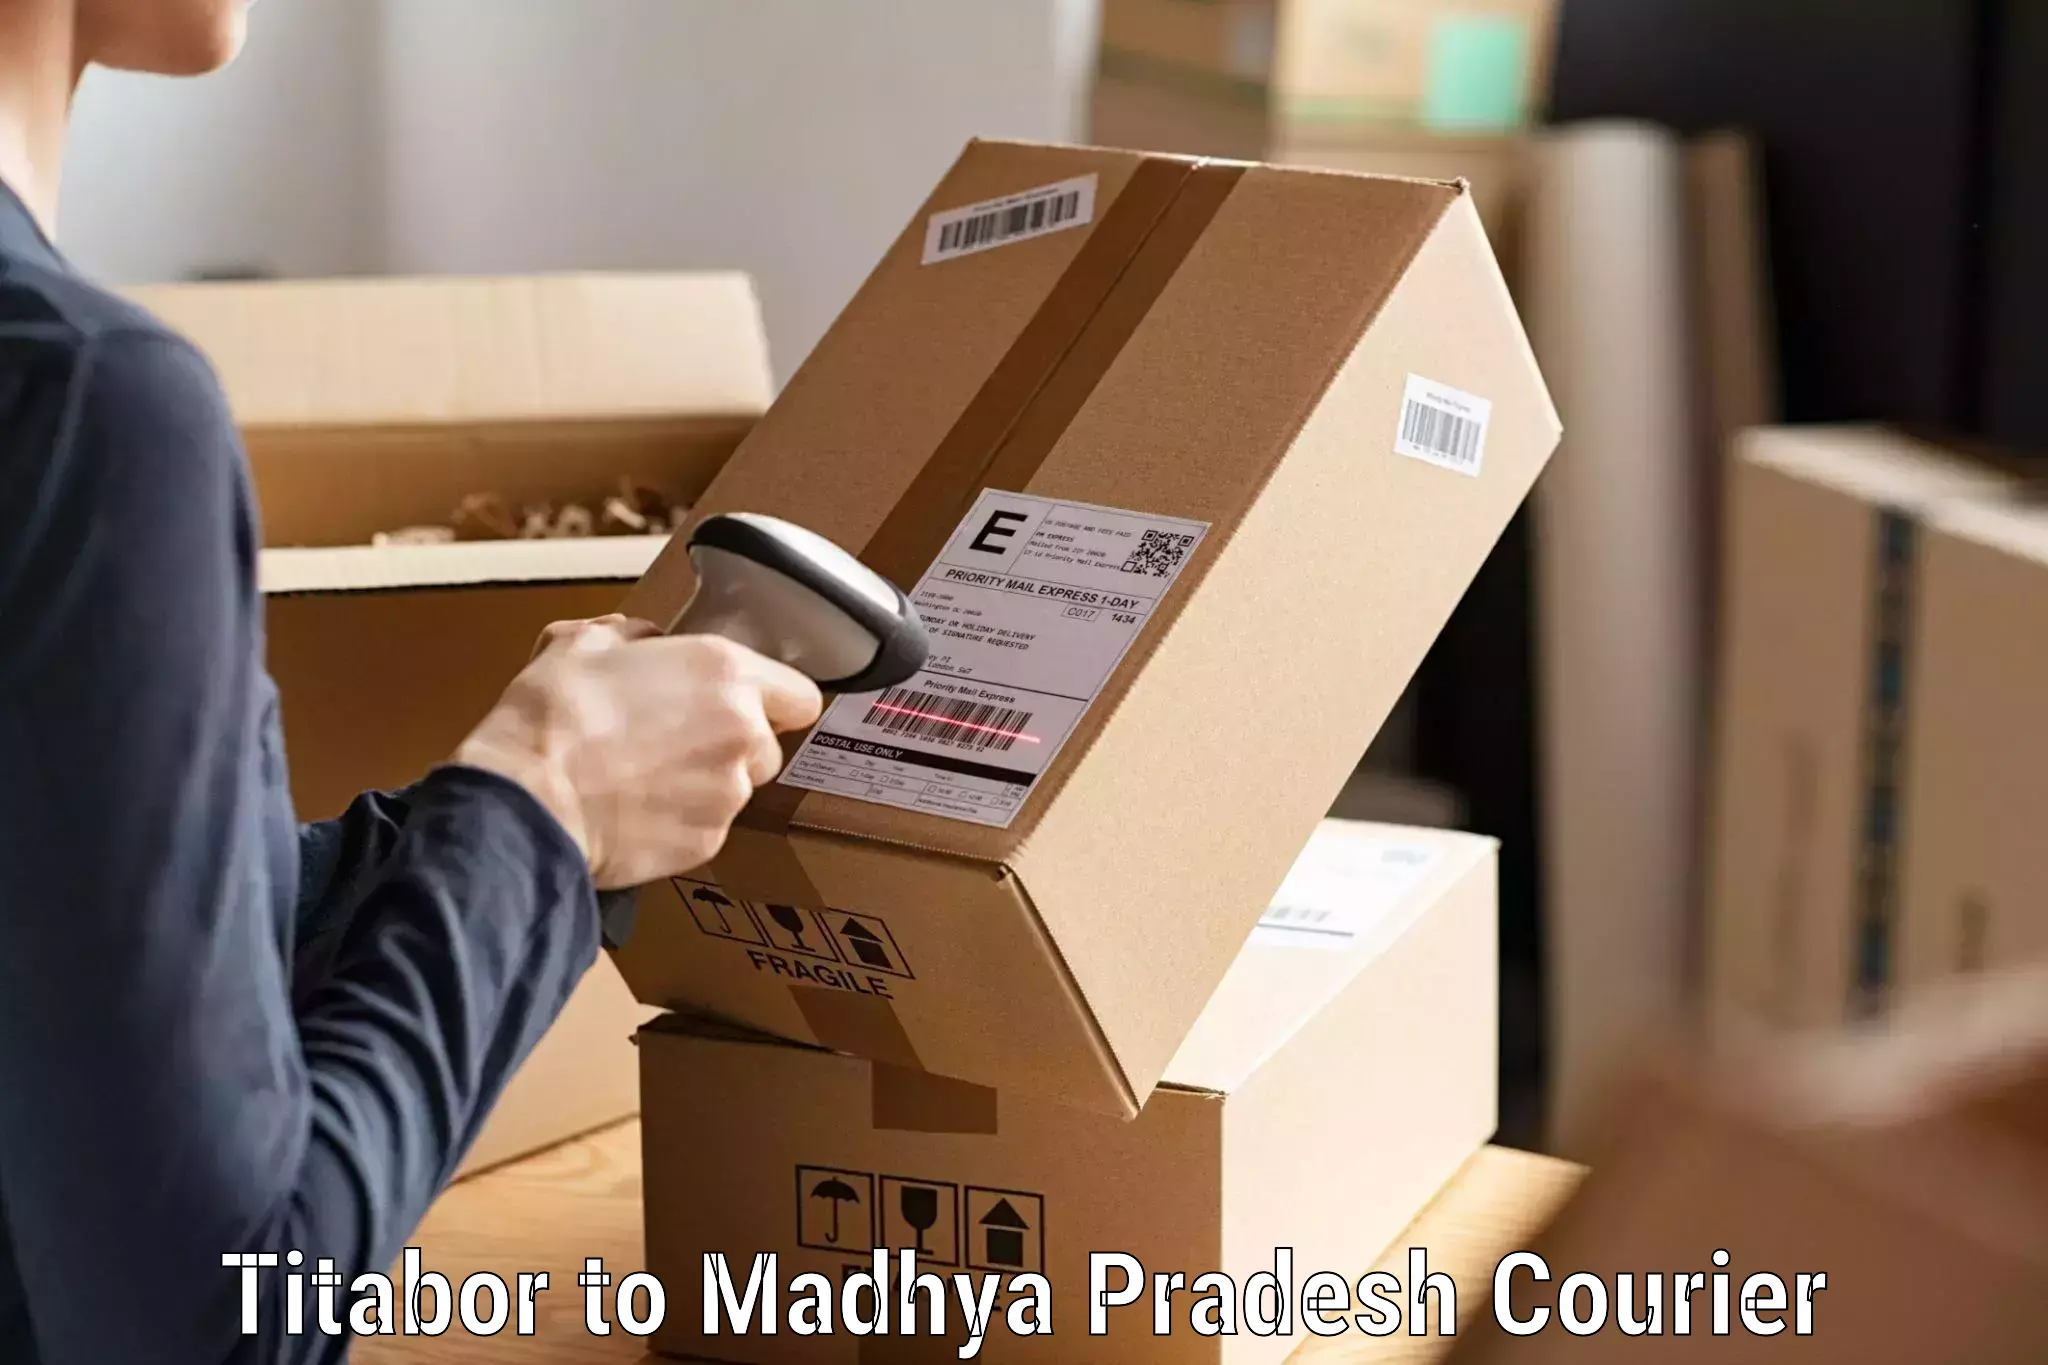 Bulk courier orders Titabor to Nainpur